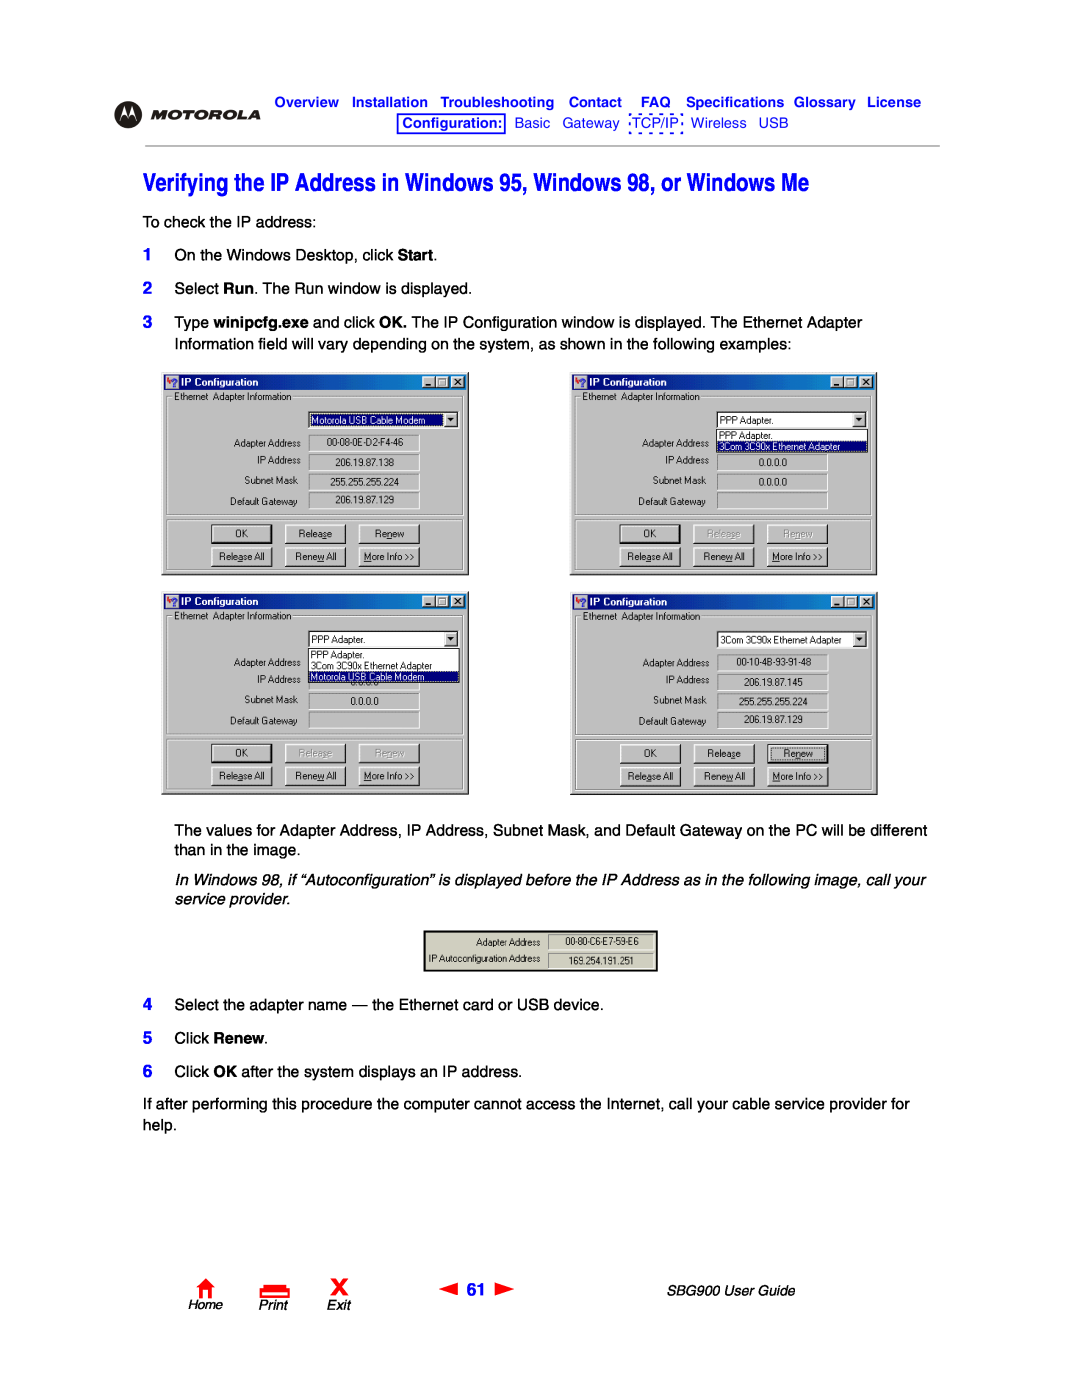 Motorola SBG900 manual Verifying the IP Address in Windows 95, Windows 98, or Windows Me 